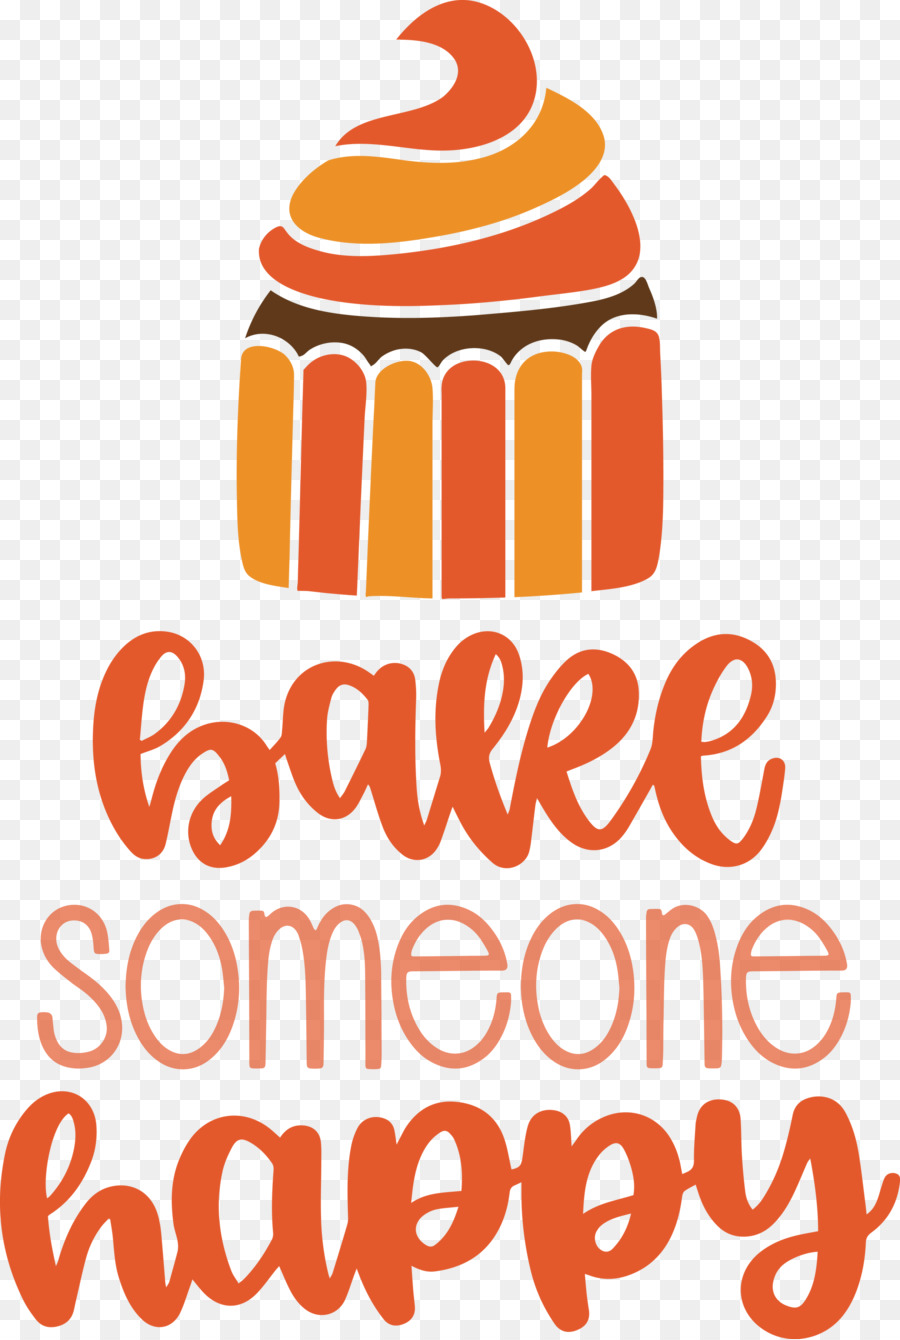 Backen Sie jemanden Happy Cake Food - 